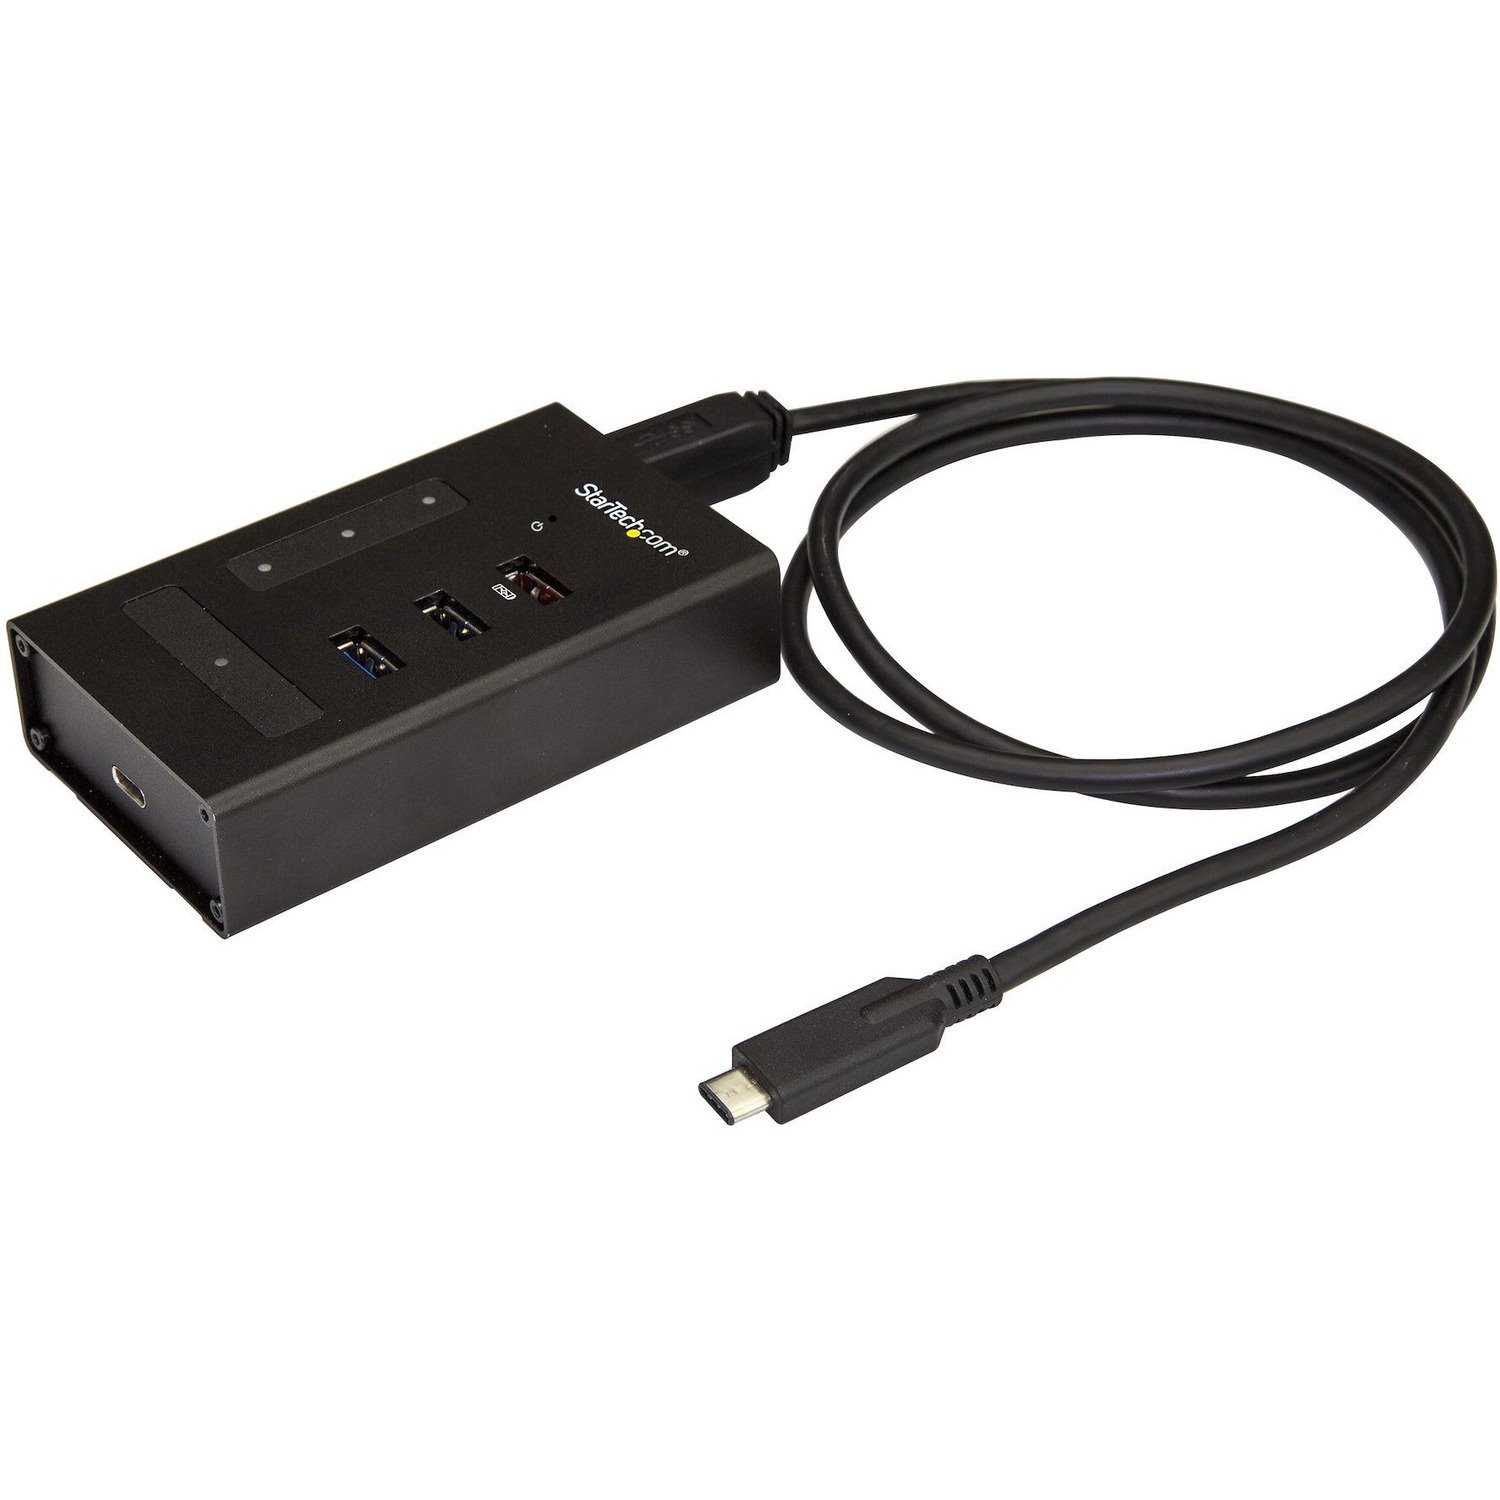 StarTech.com USB Hub - USB Type C - External - Black